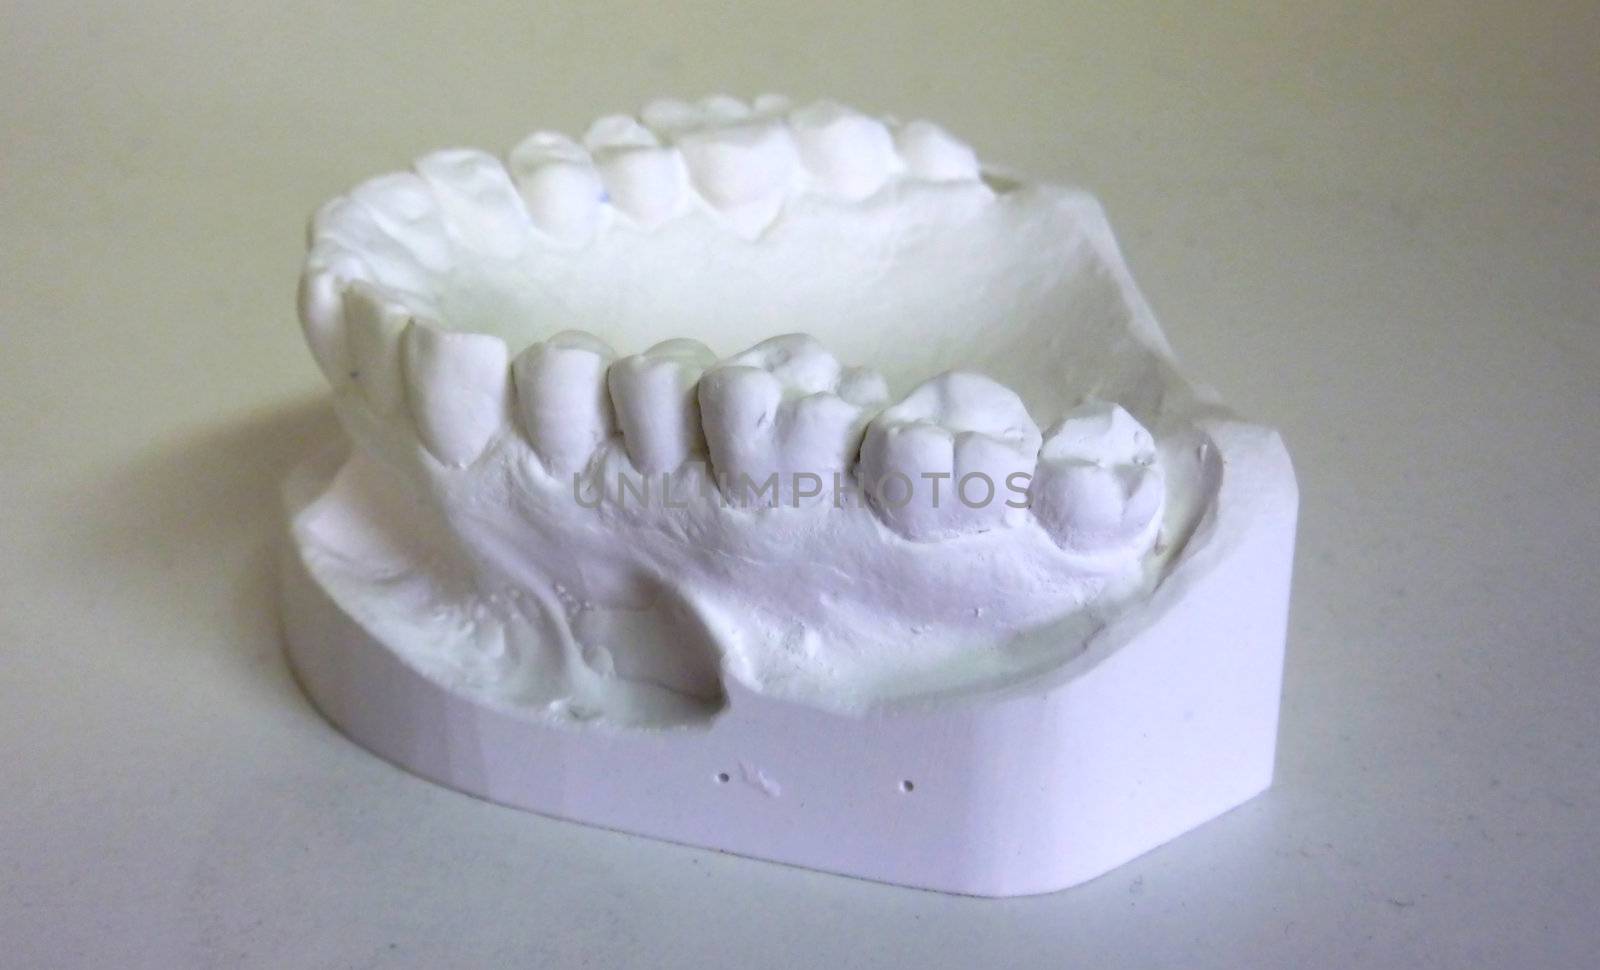 Plaster teeth by Elenaphotos21